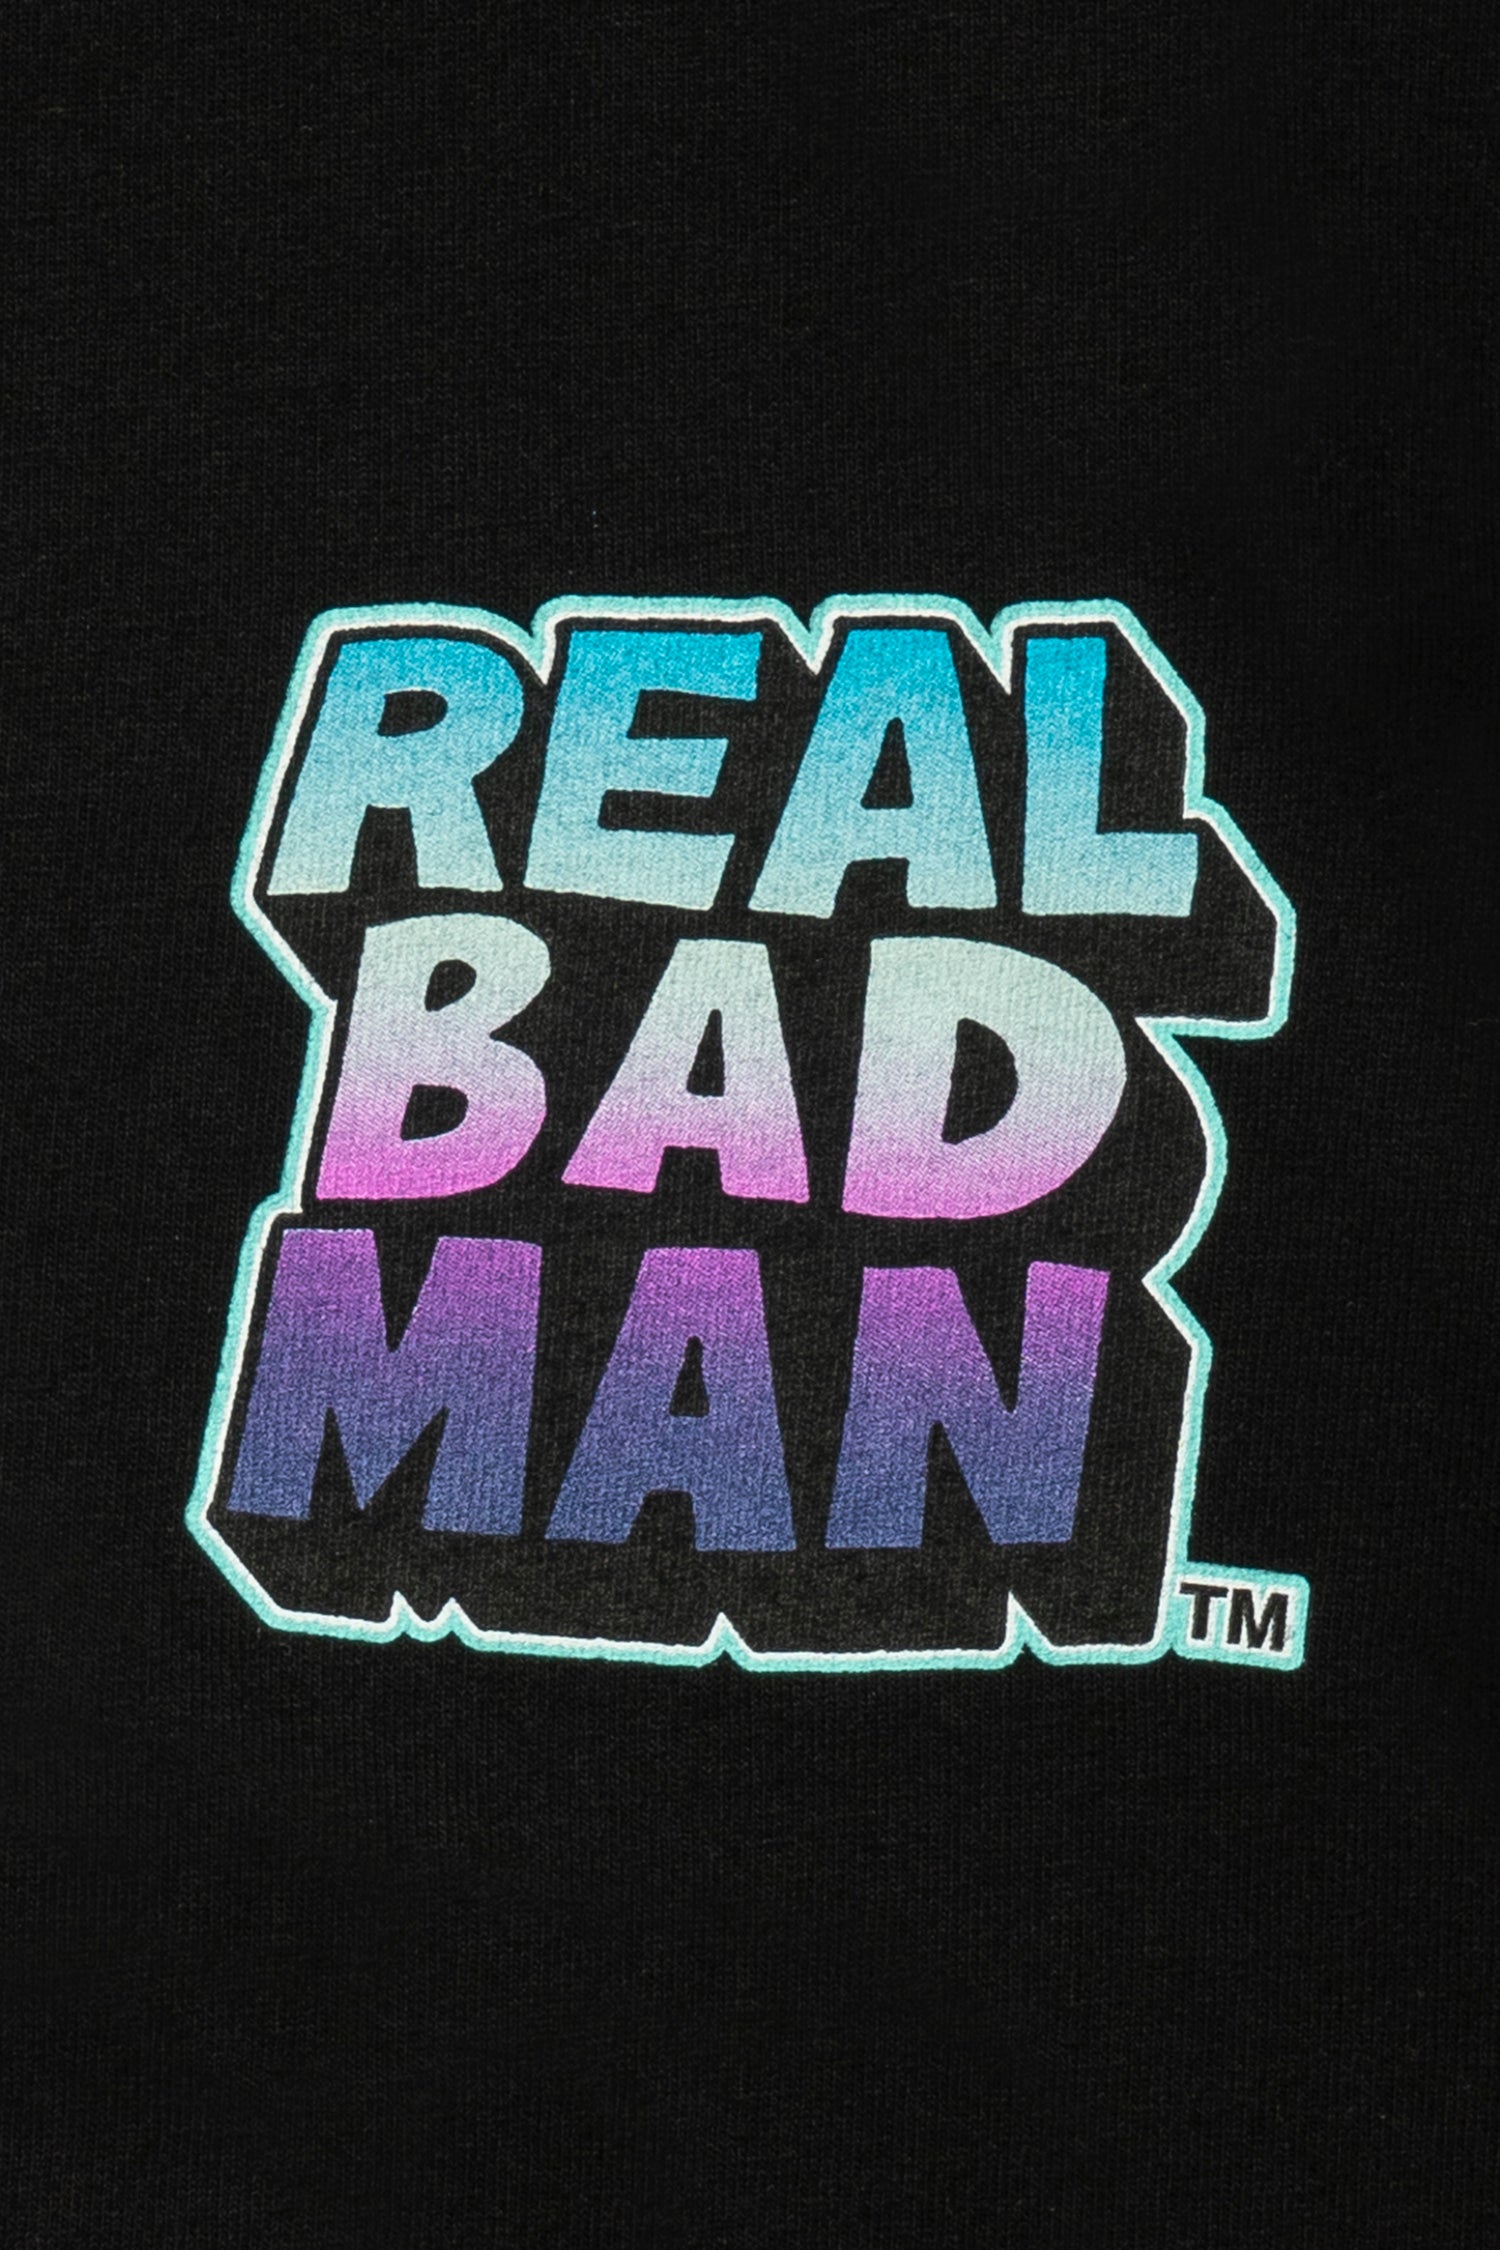 Selectshop FRAME - REAL BAD MAN RBM Logo Vol.7 Tee T-Shirts Dubai